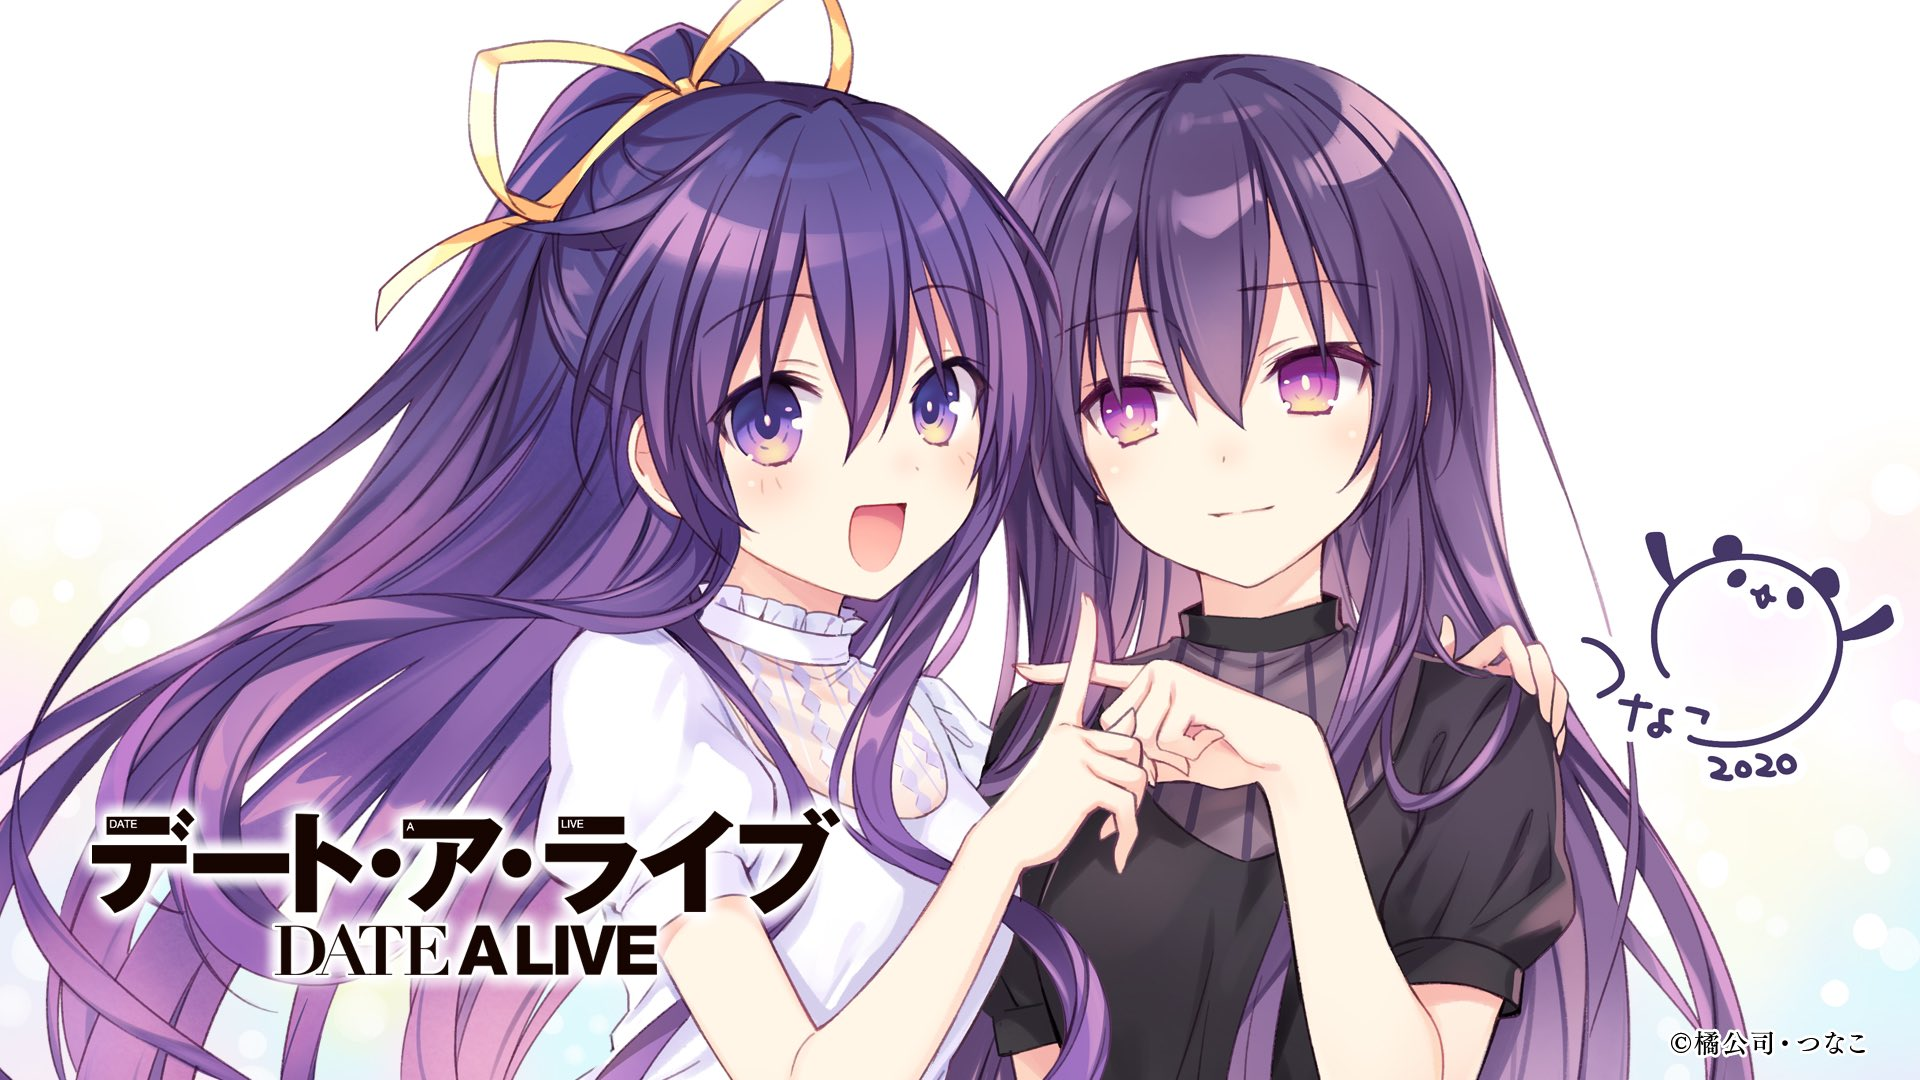 Anime Corner - Date a Live season 4 sure came early! 😆